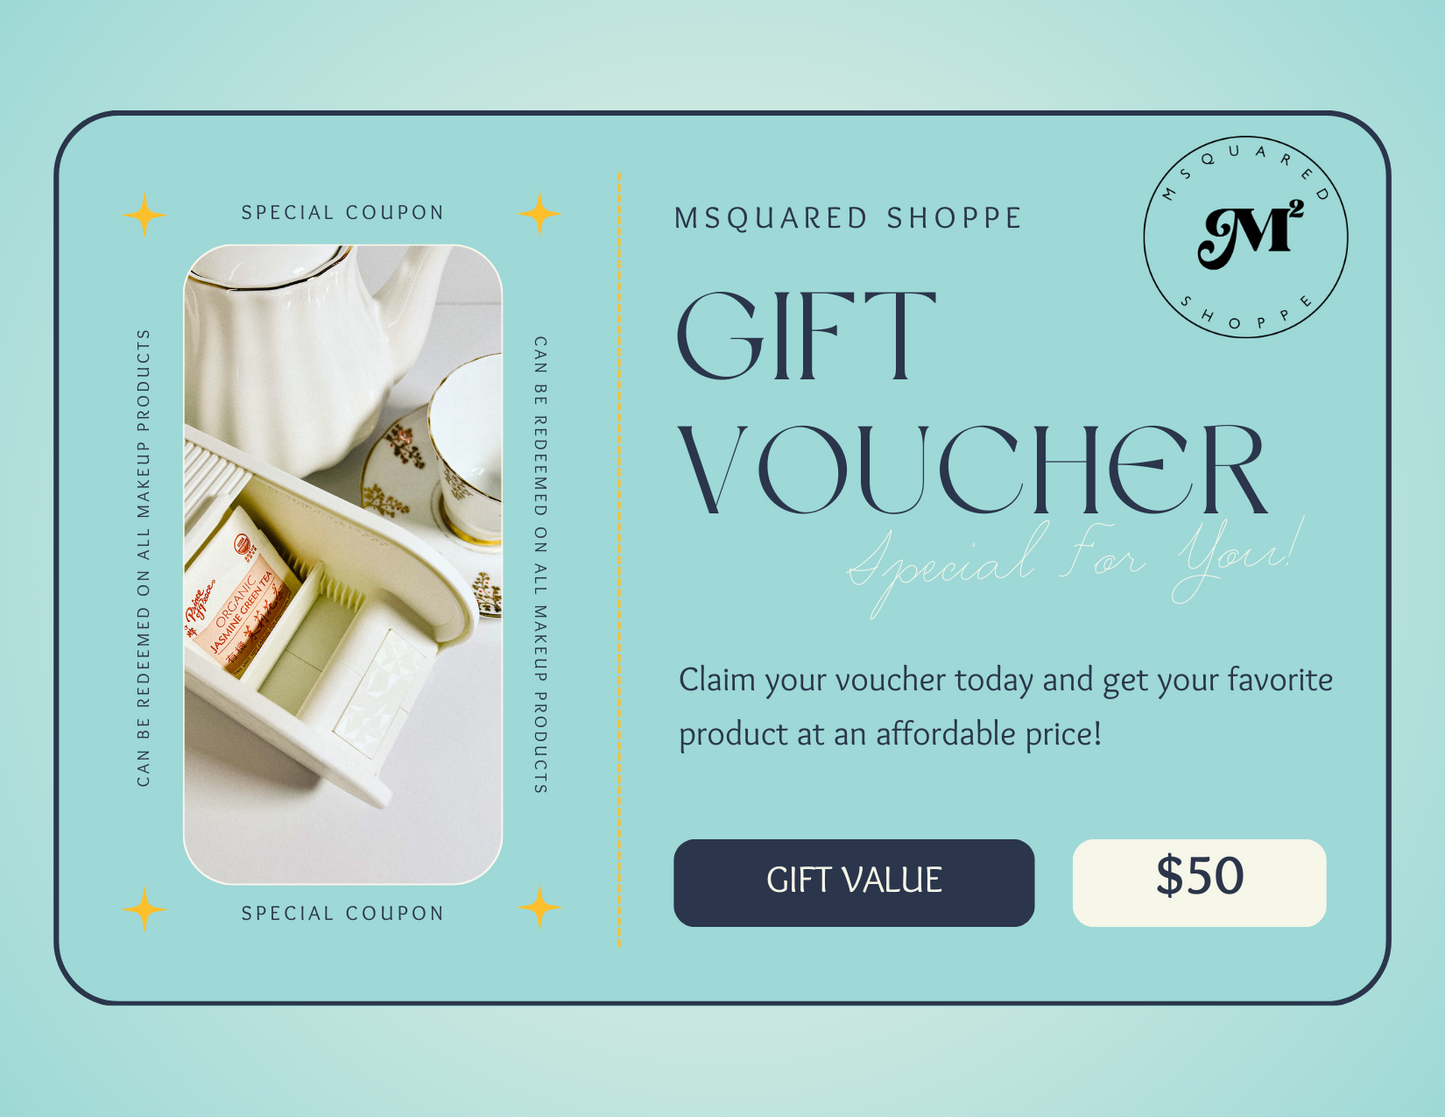 MSquared Shoppe Gift Voucher